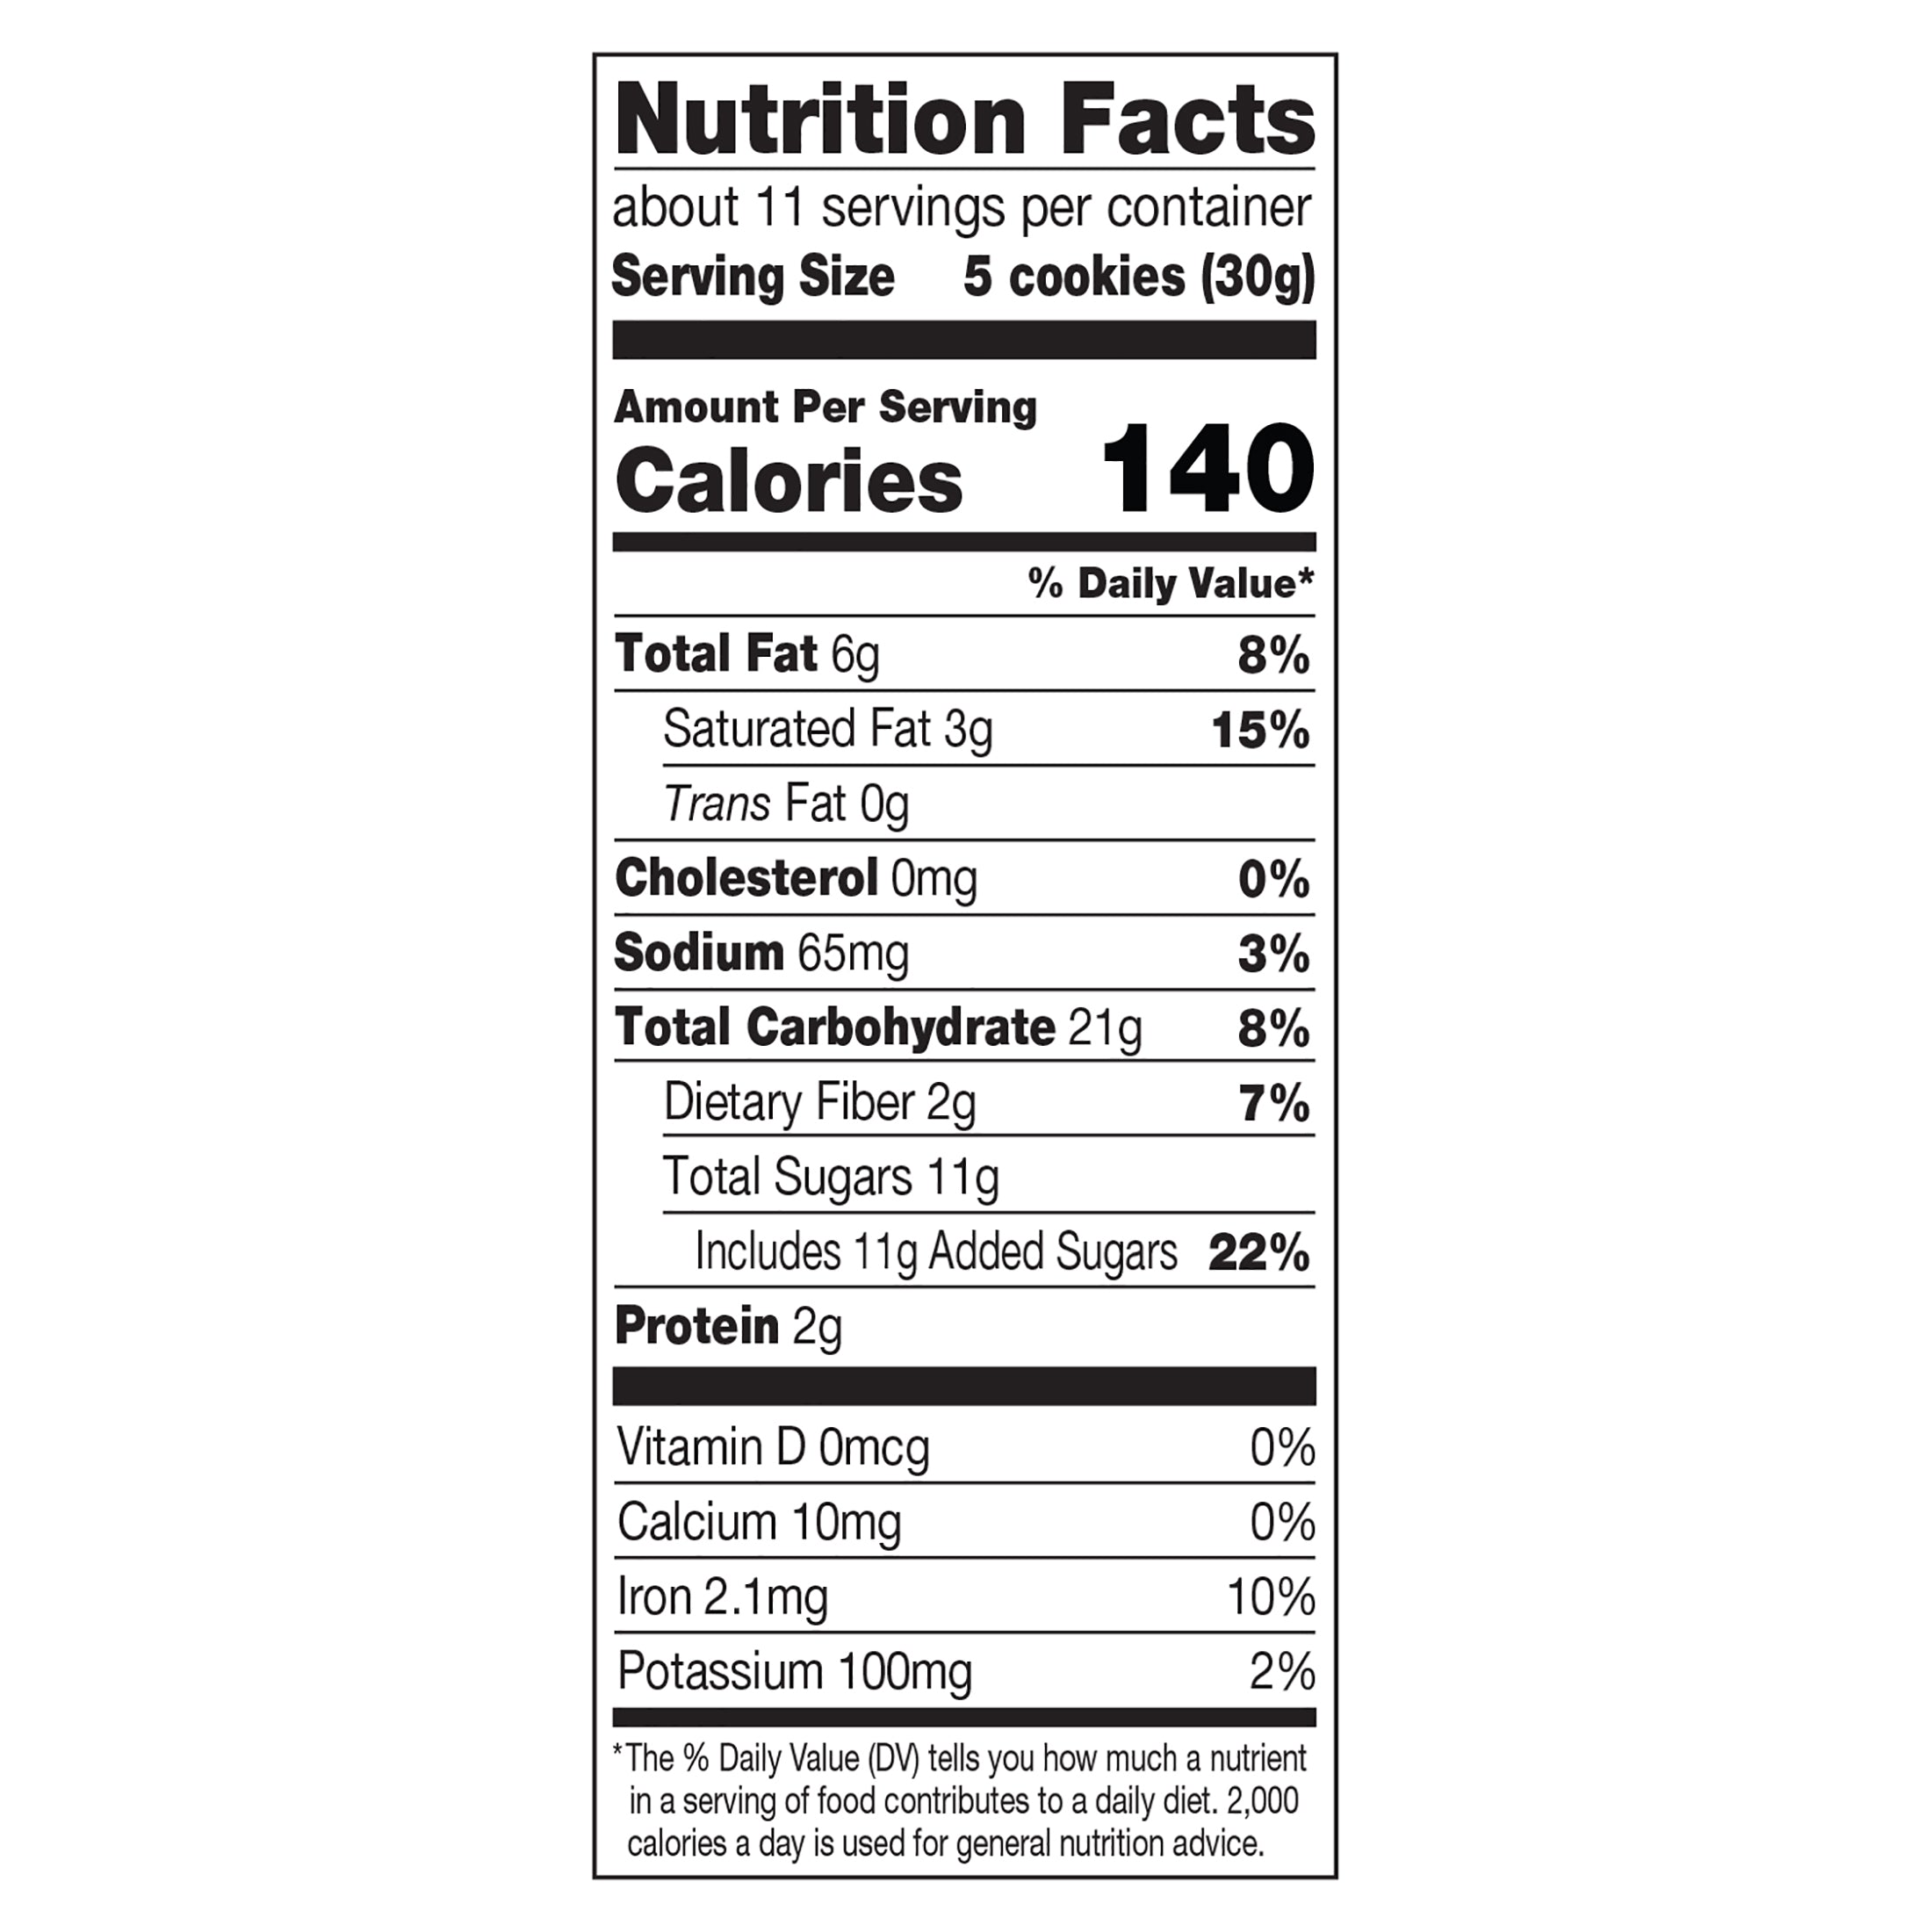 Stauffer's Stars Dark Chocolate 10oz Box nutritional facts